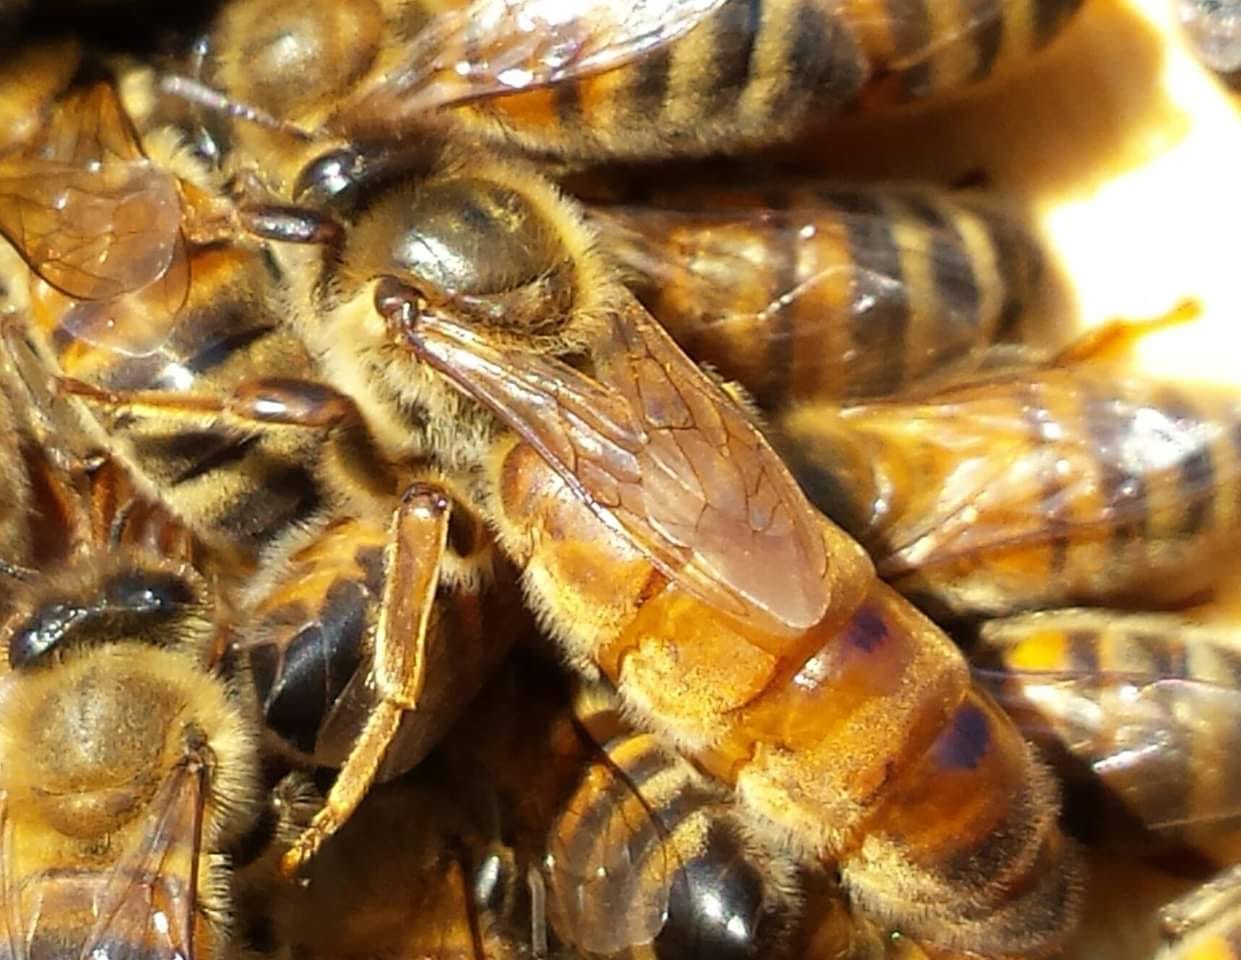 bekfast ana arı